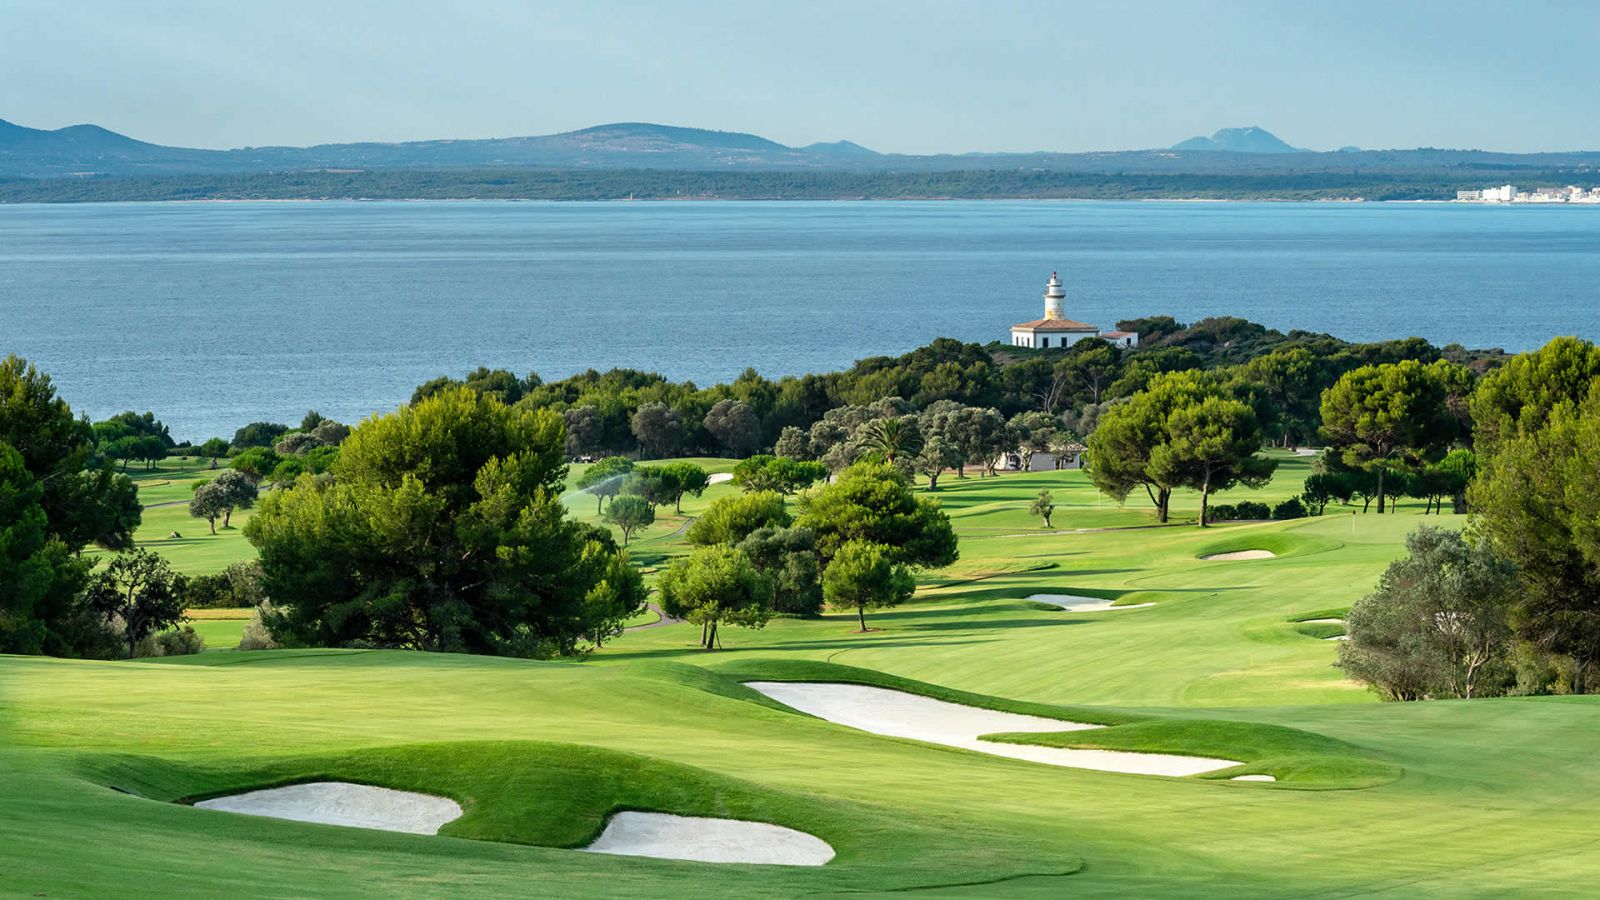 Golf In Mallorca - Your Move Spain